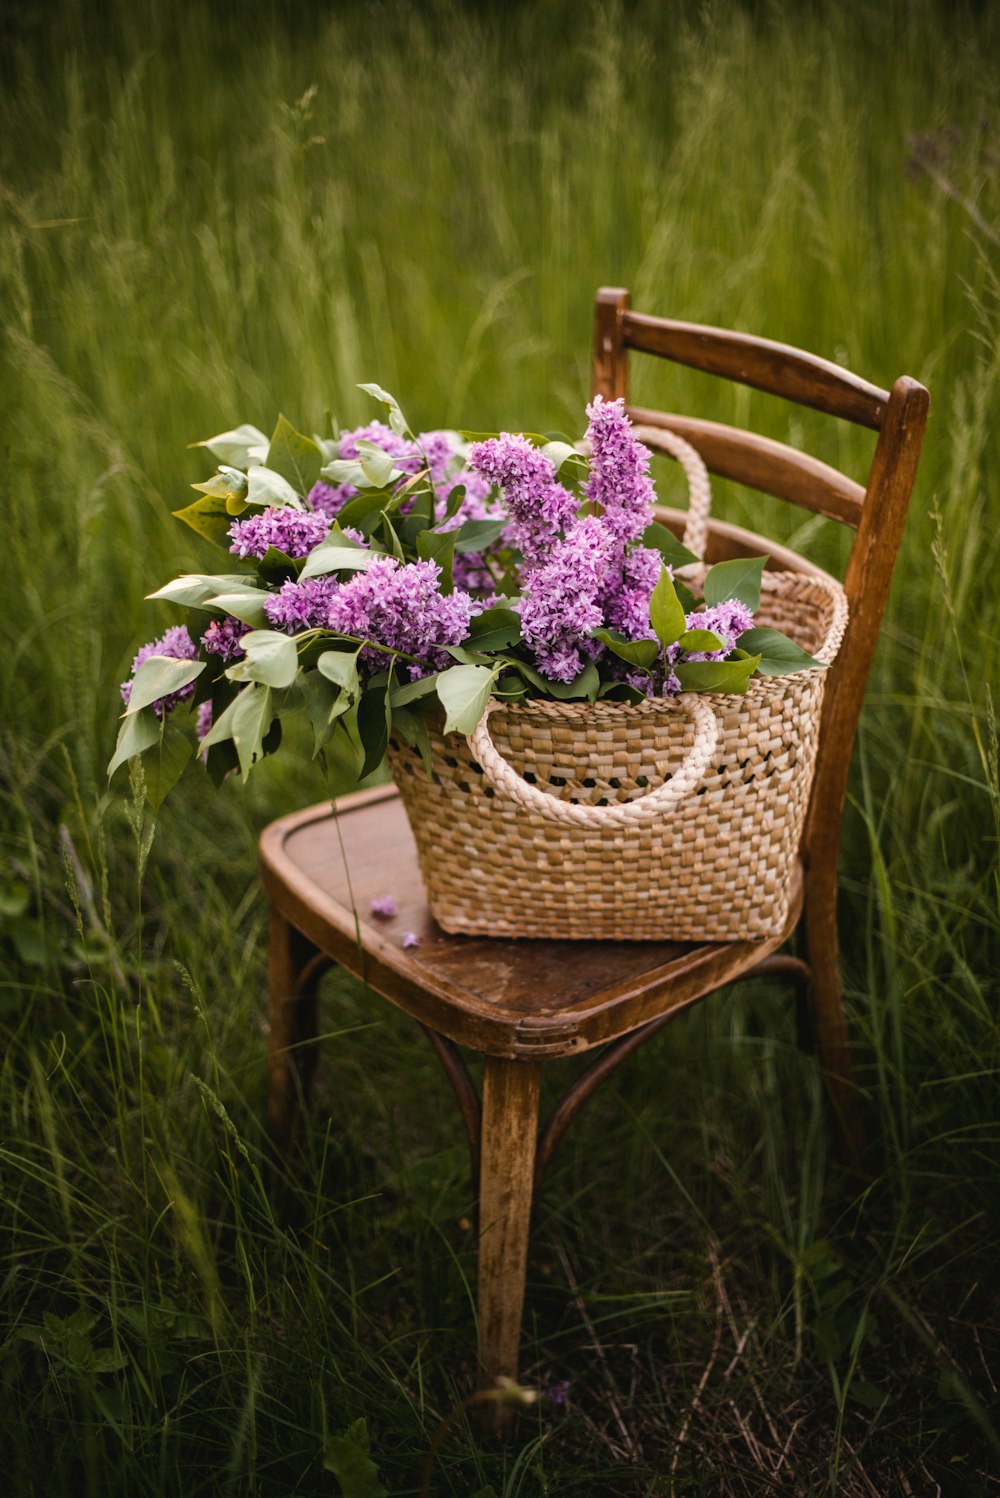 purple flowers in brown woven basket on brown wooden table